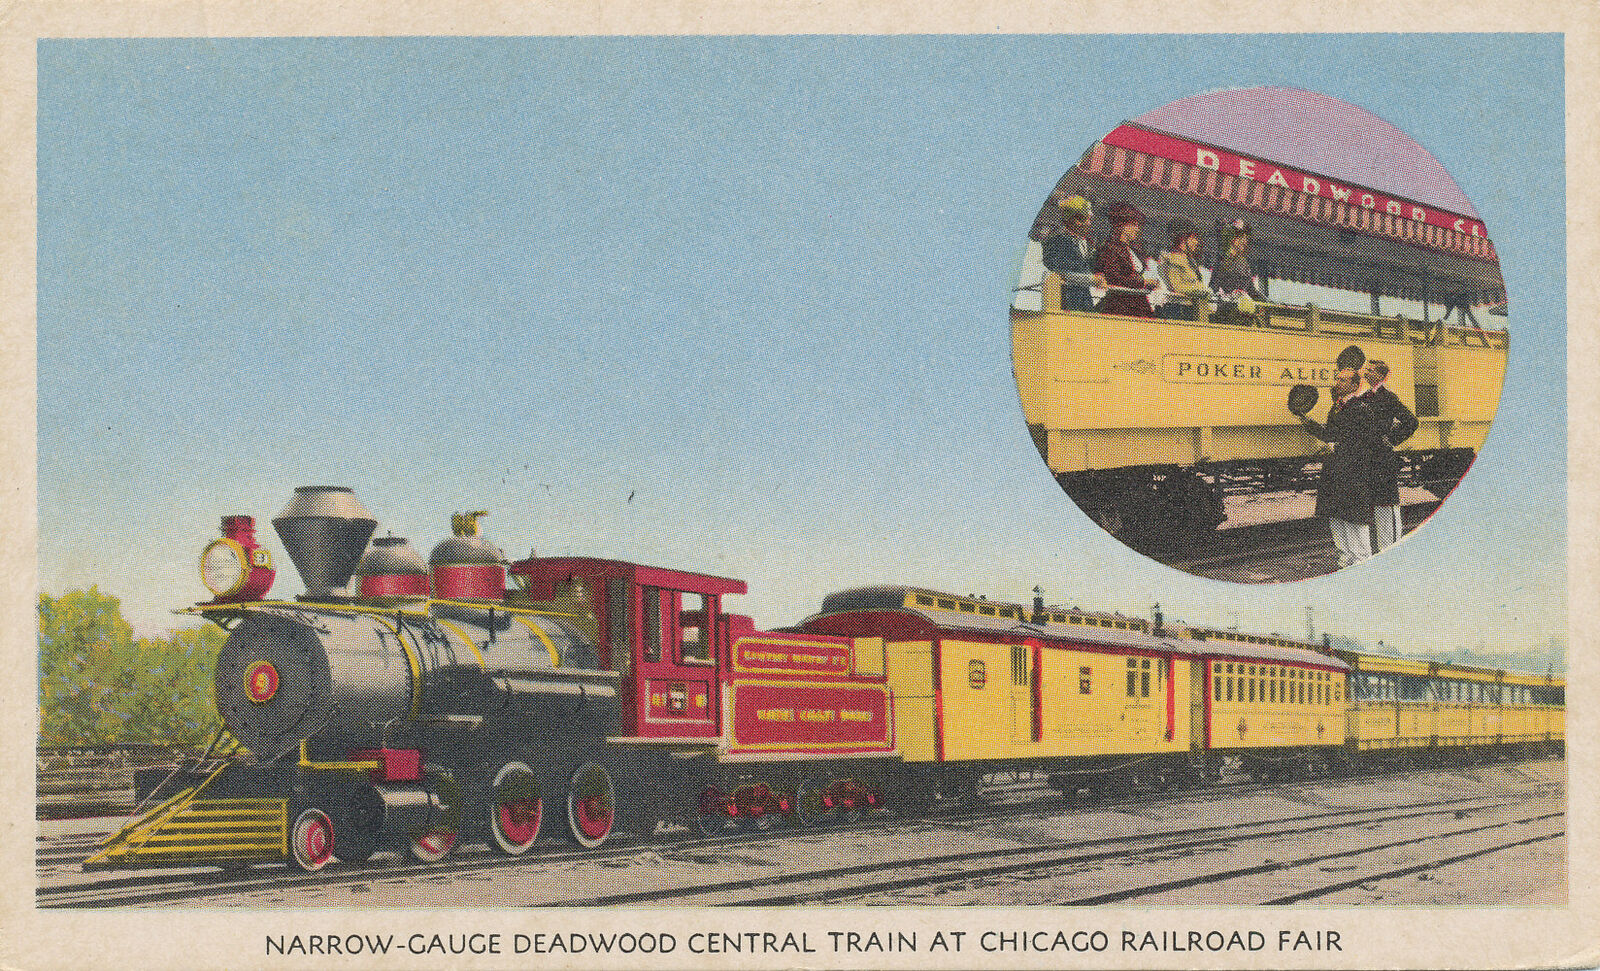 BURLINGTON ROUTE - Narrow-Gauge Deadwood -CHICAGO RAILROAD FAIR 1949 - postcard